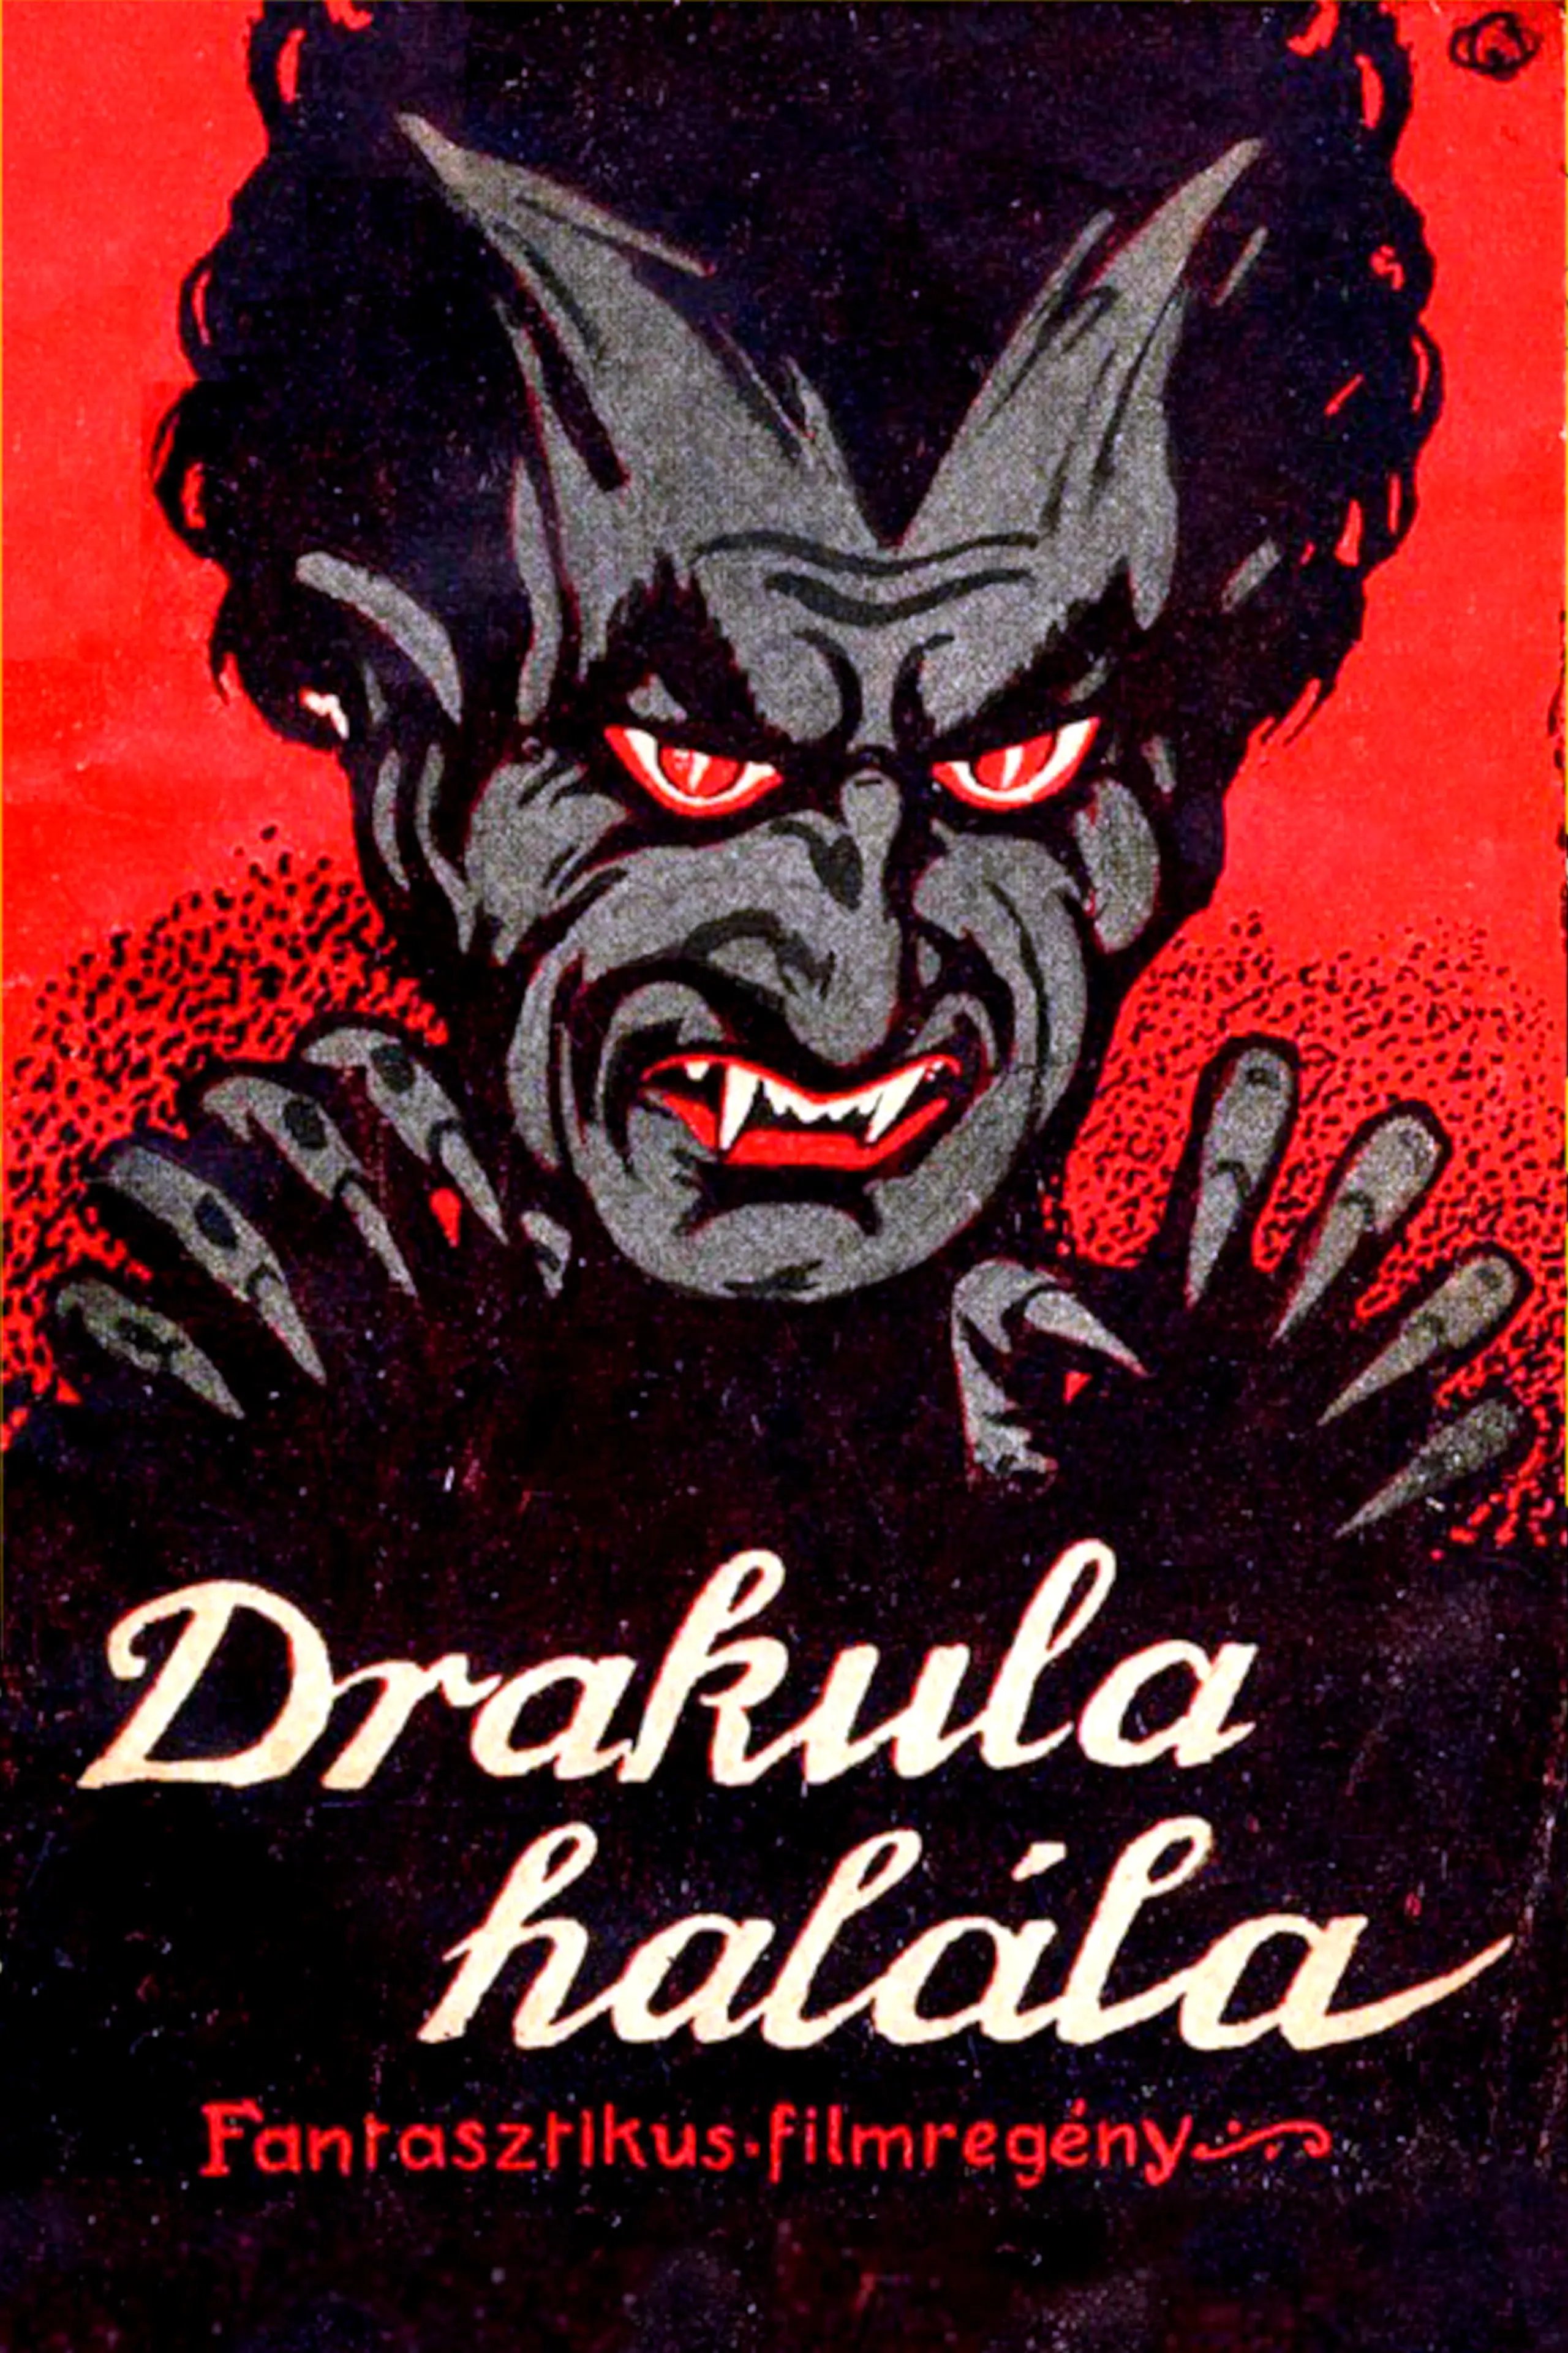 Dracula's Death